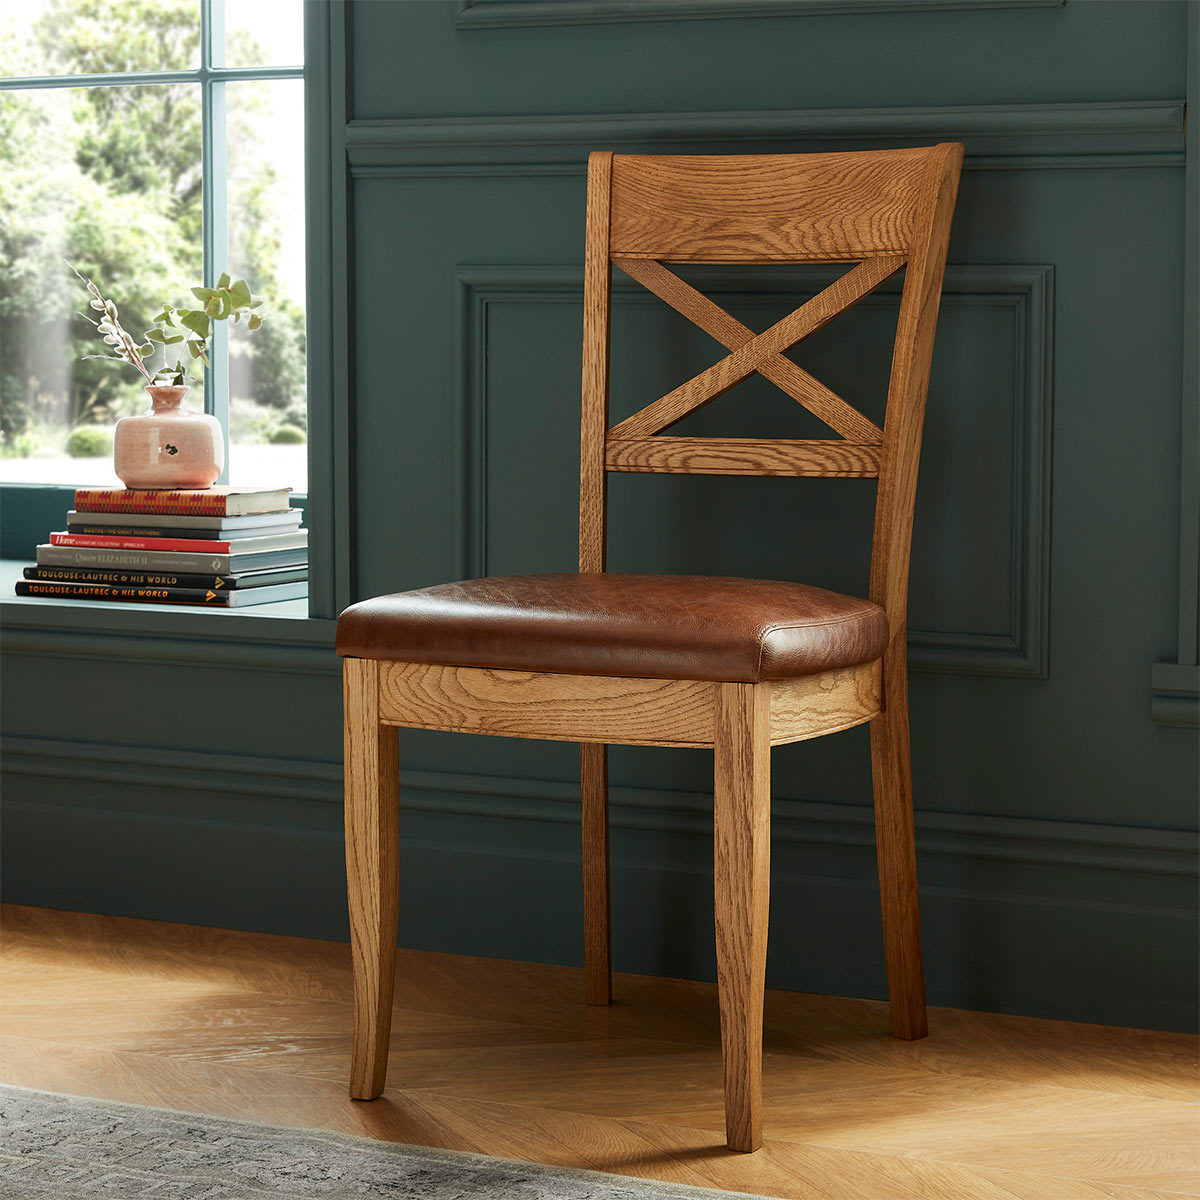 Bentley Designs Westbury Rustic Oak Cross Back Dining Chairs 2 Pack Costco Uk